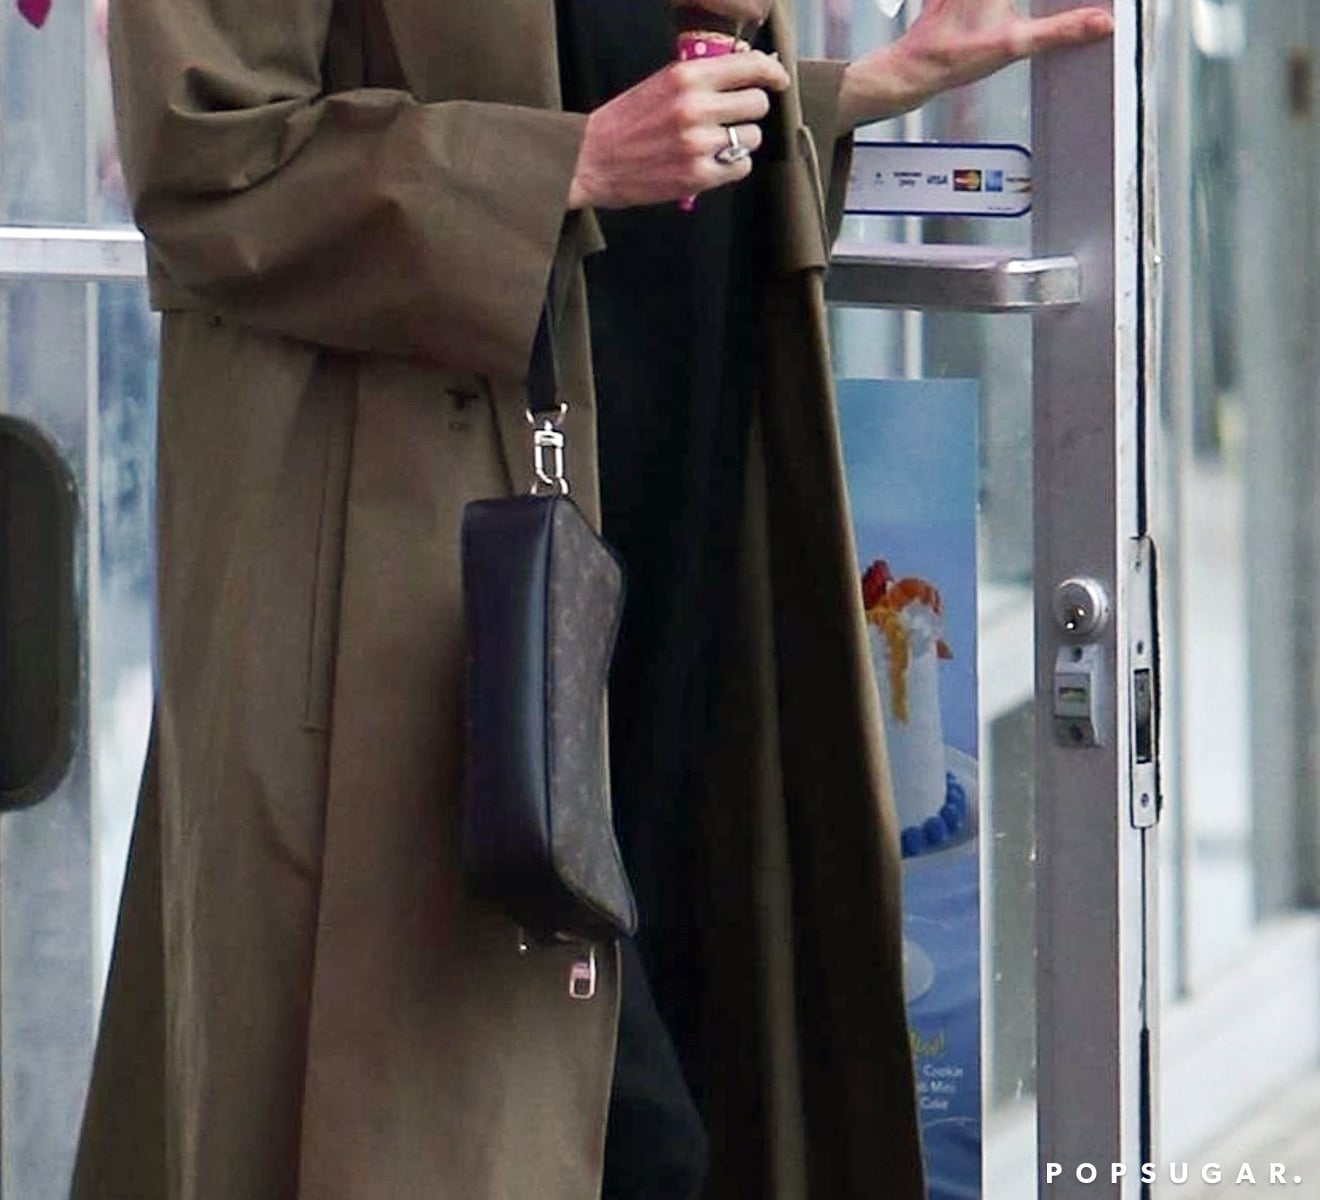 Angelina Jolie Wears Louis Vuitton Gold Clutch Cuffed To Her Wrist